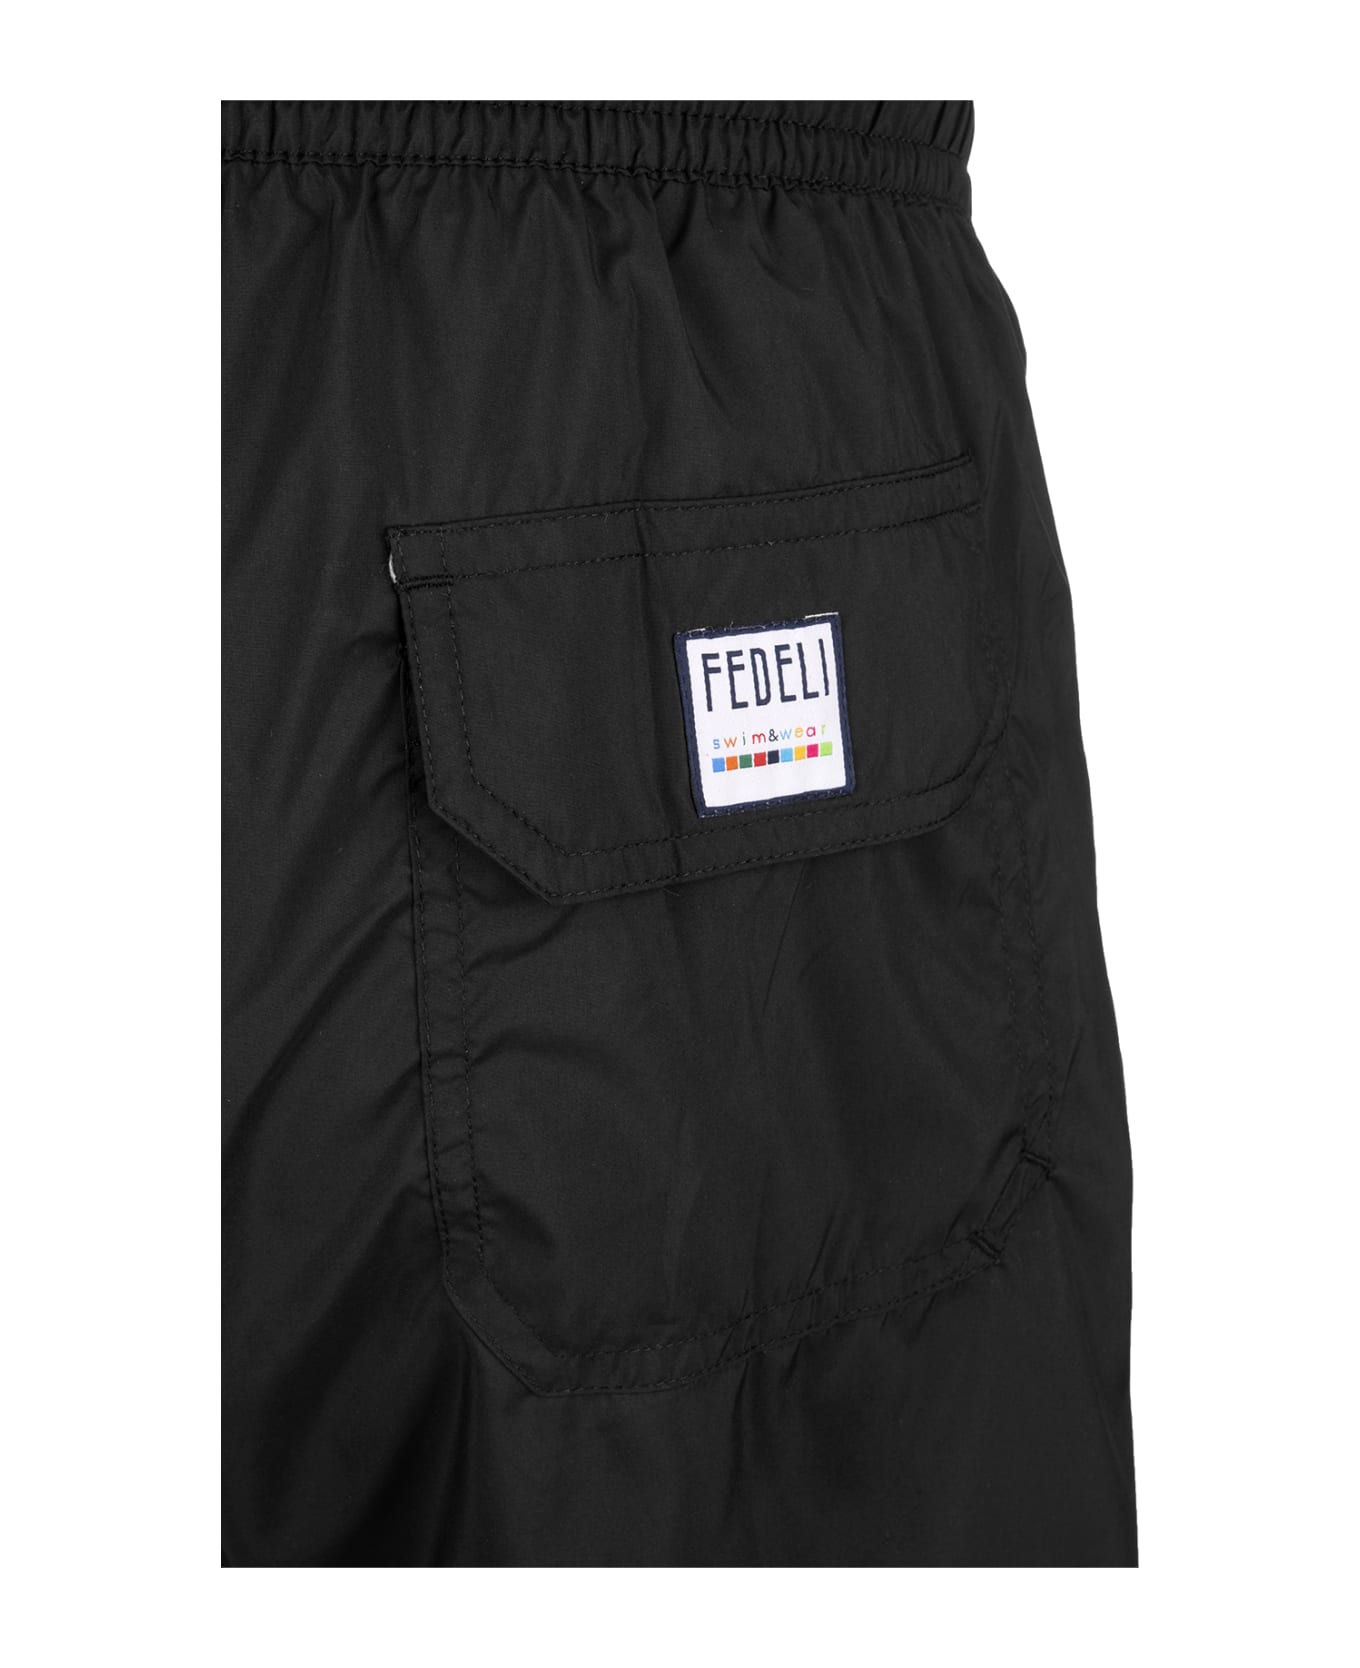 Fedeli Black Swim Shorts - Black